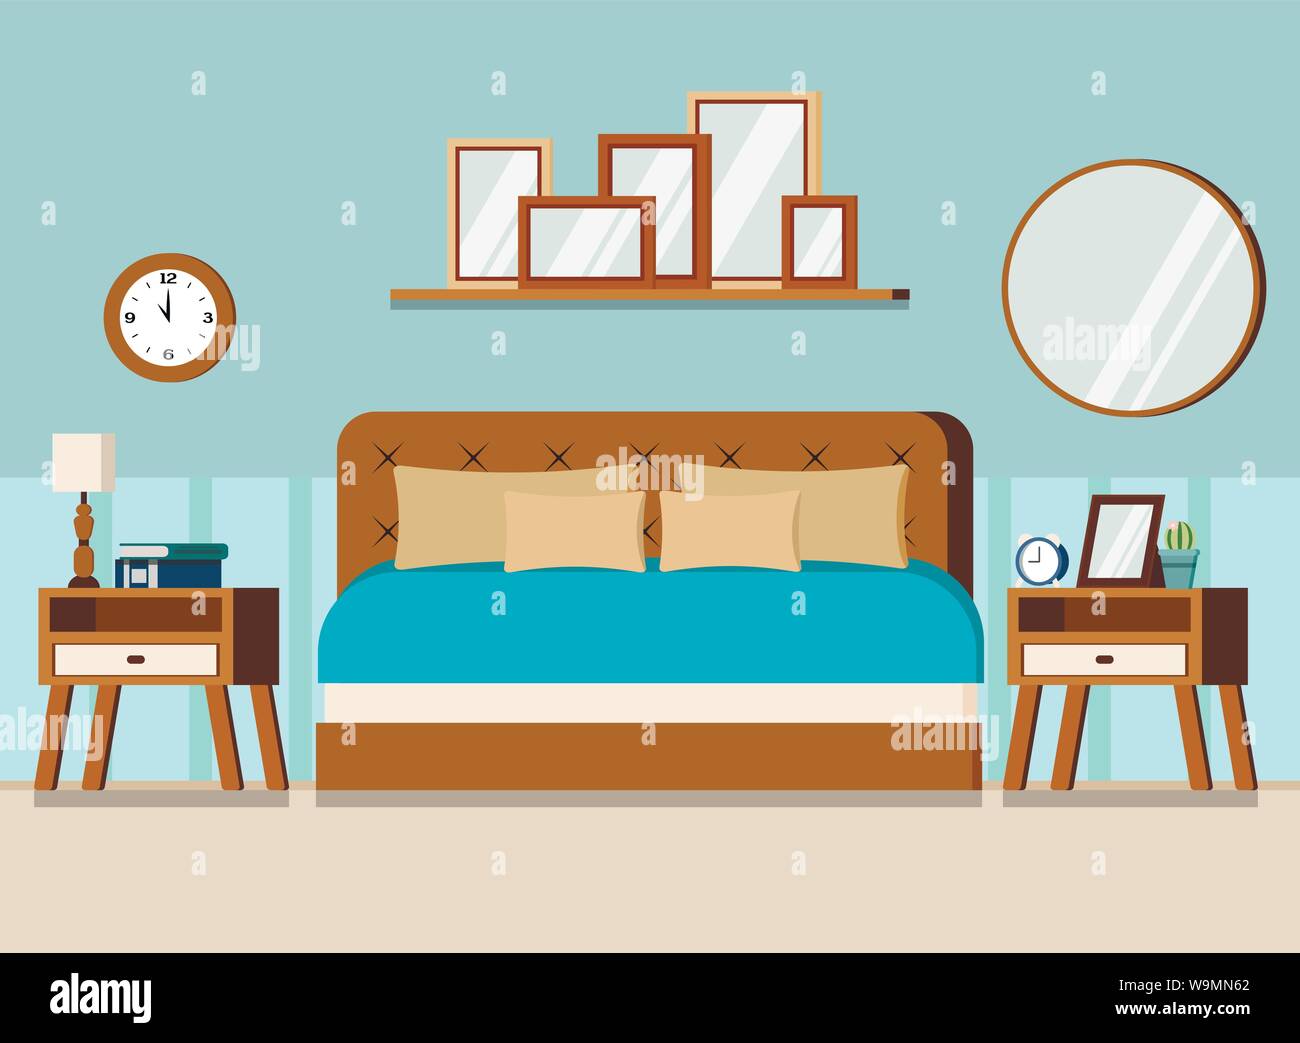 Cozy bedroom interior scene with furniture bed, nightstands, wall watch, mirror, books, lamp, alarm clock, shelf with pictures Stock Vector